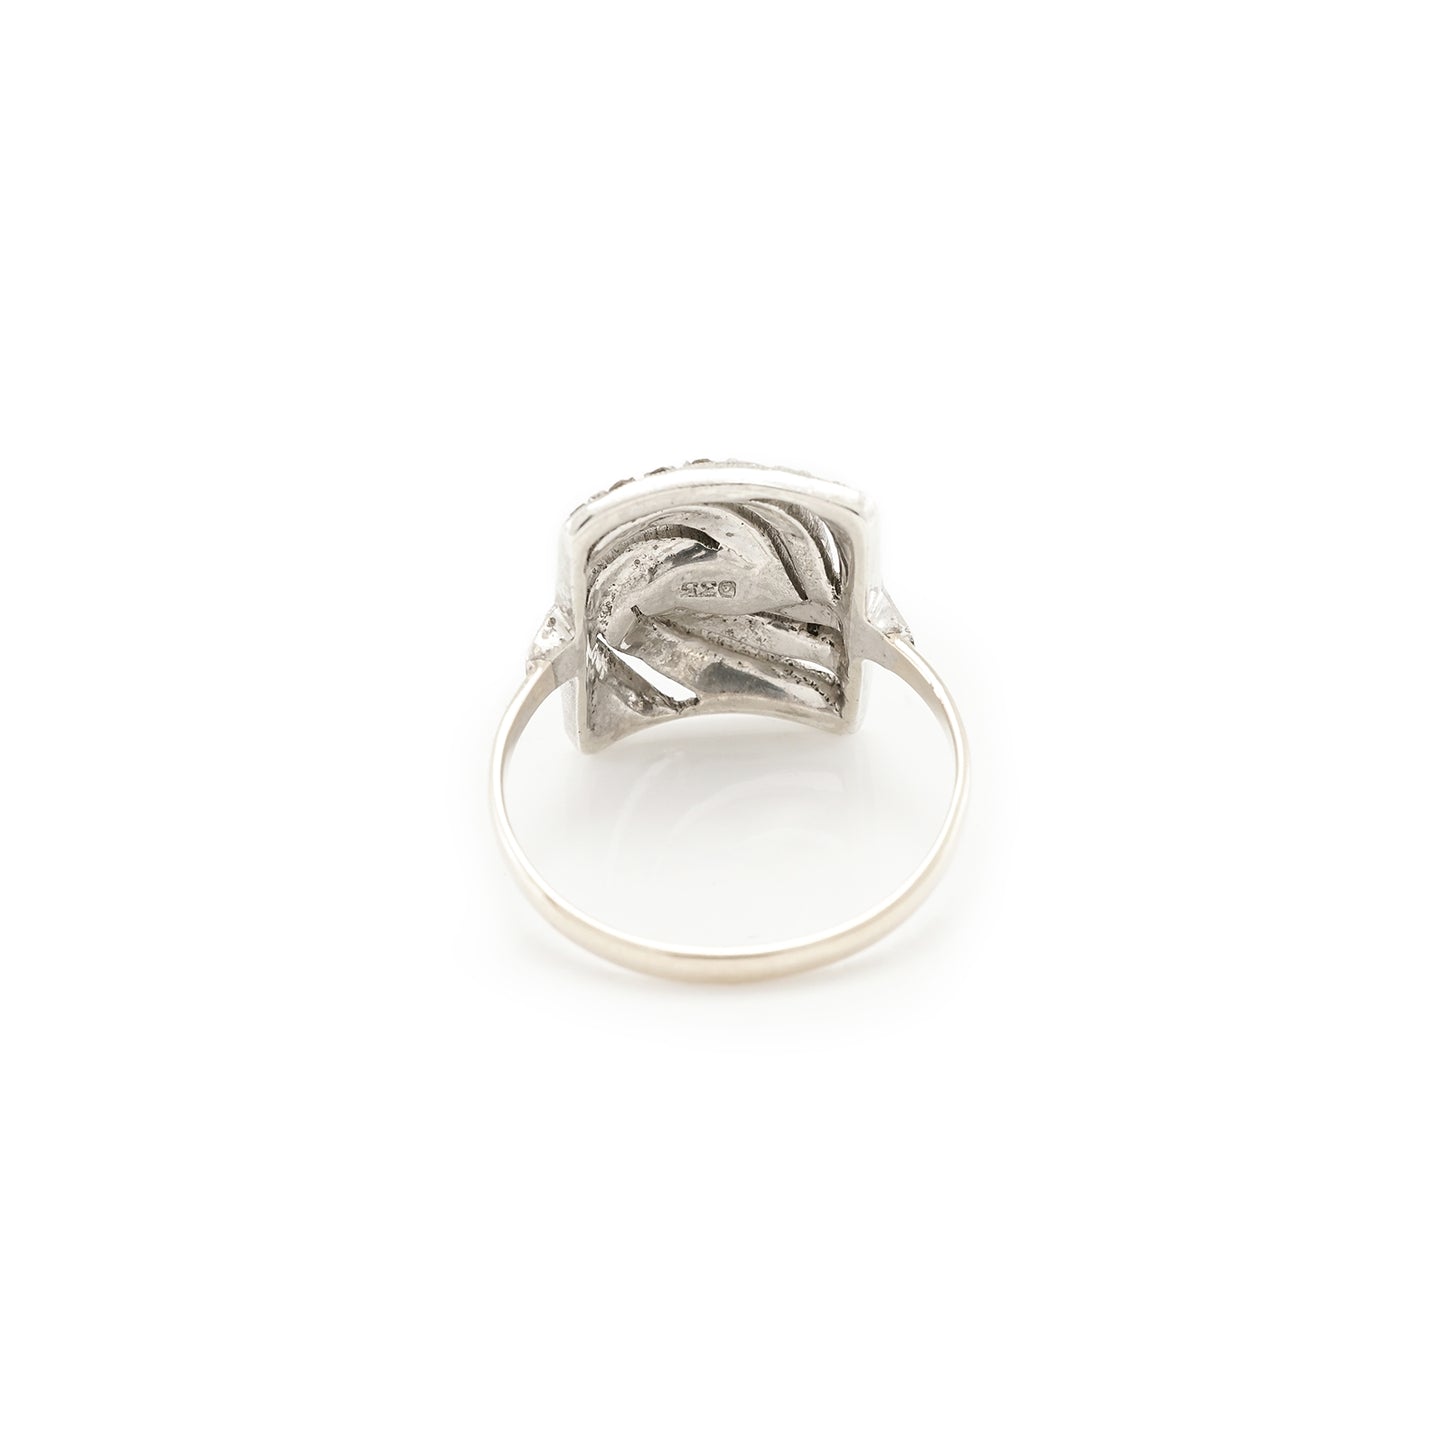 Vintage ring zirconia 333 8K white gold 935 silver RW54 women's ring women's jewelry